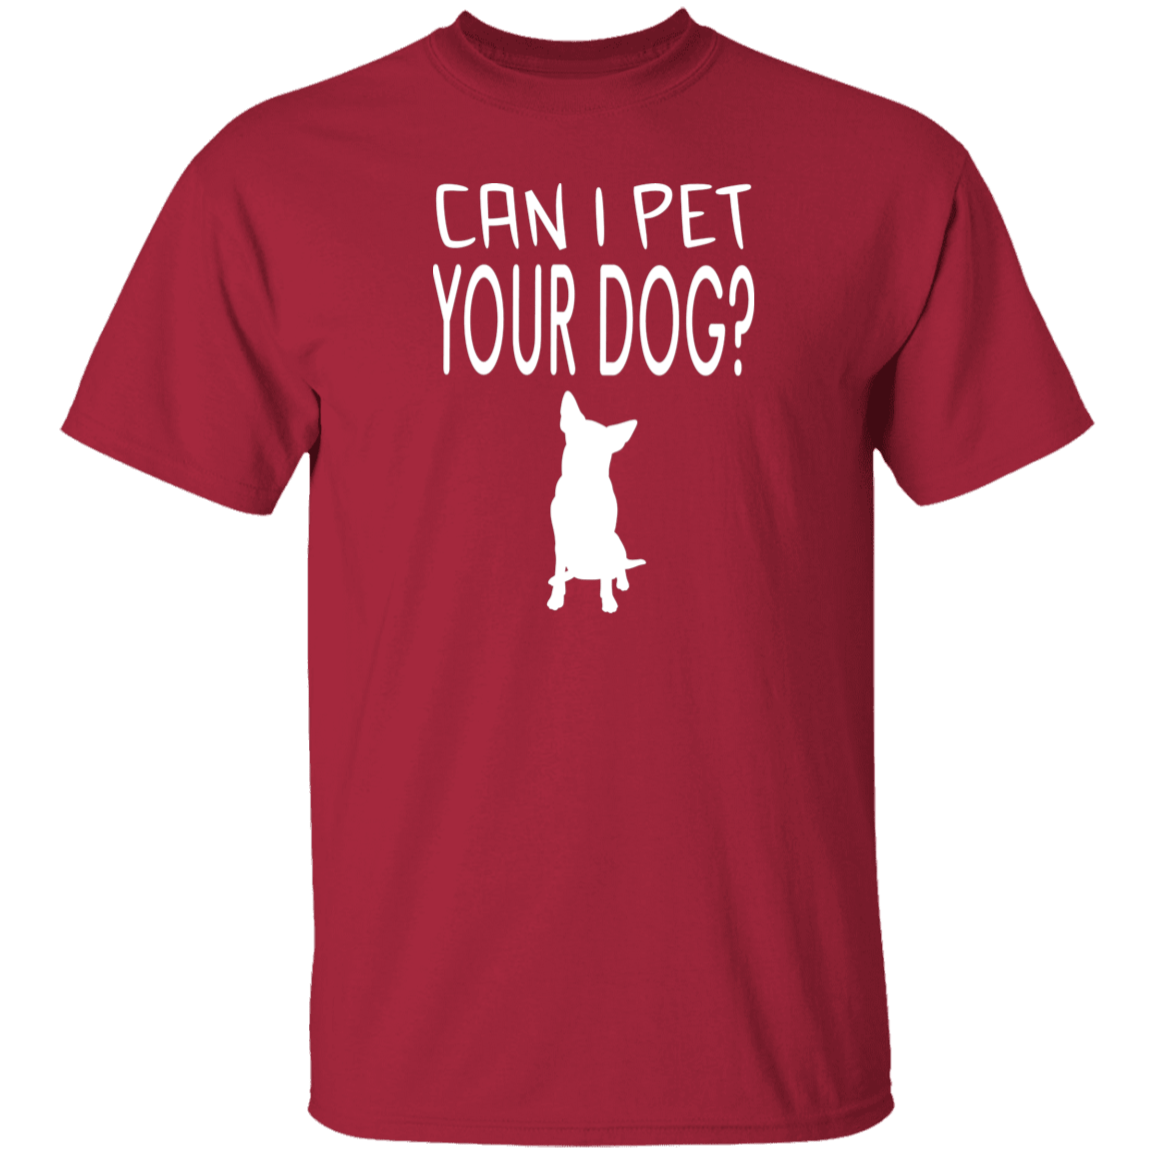 Can I Pet Your Dog - T Shirt.